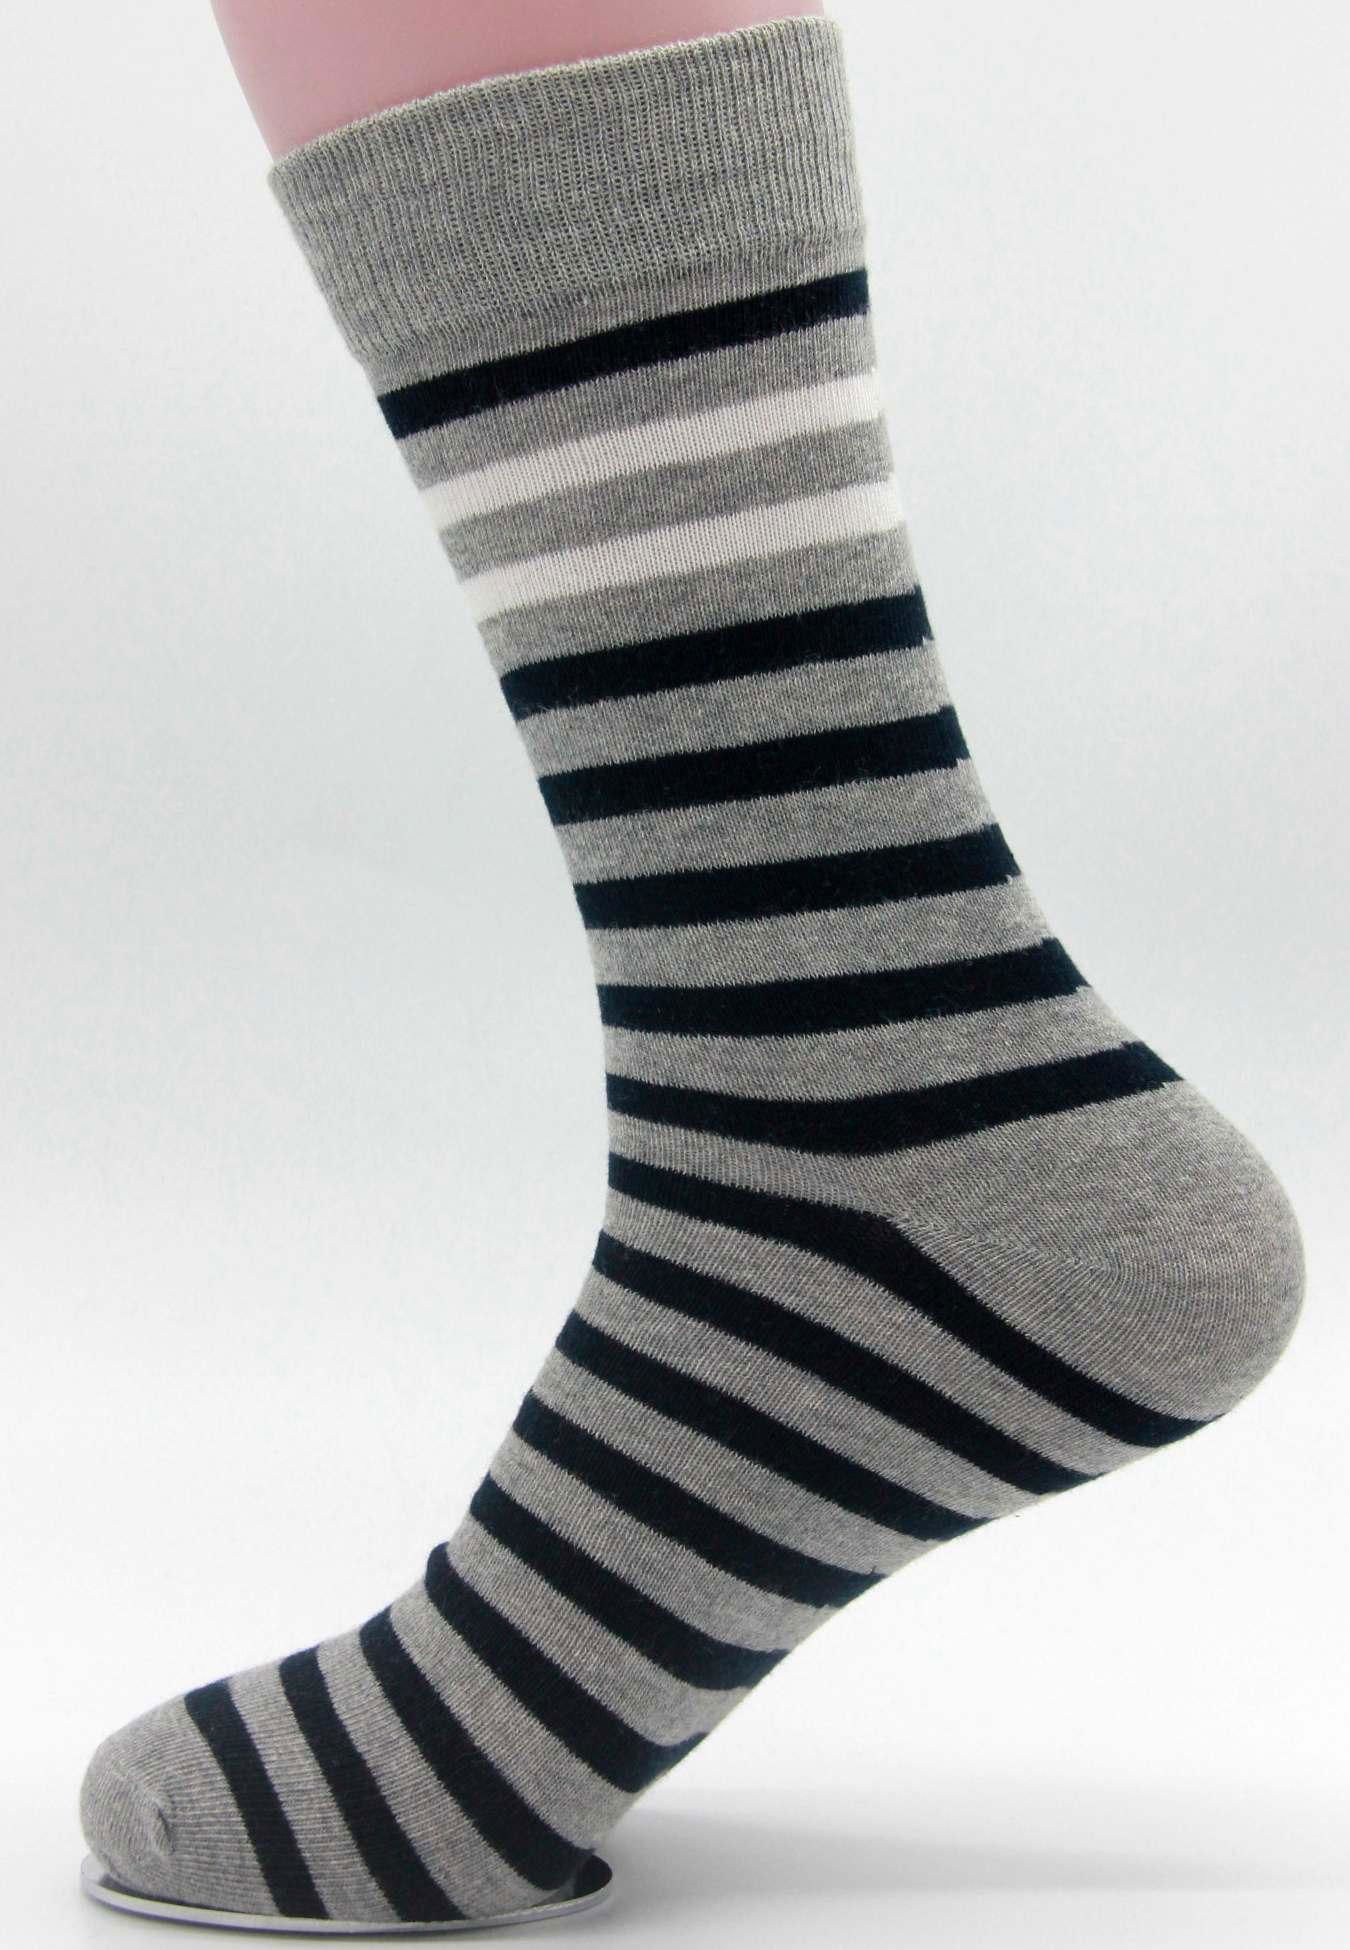 Mens socks - M-001 - SY (China Manufacturer) - Socks Stockings ...